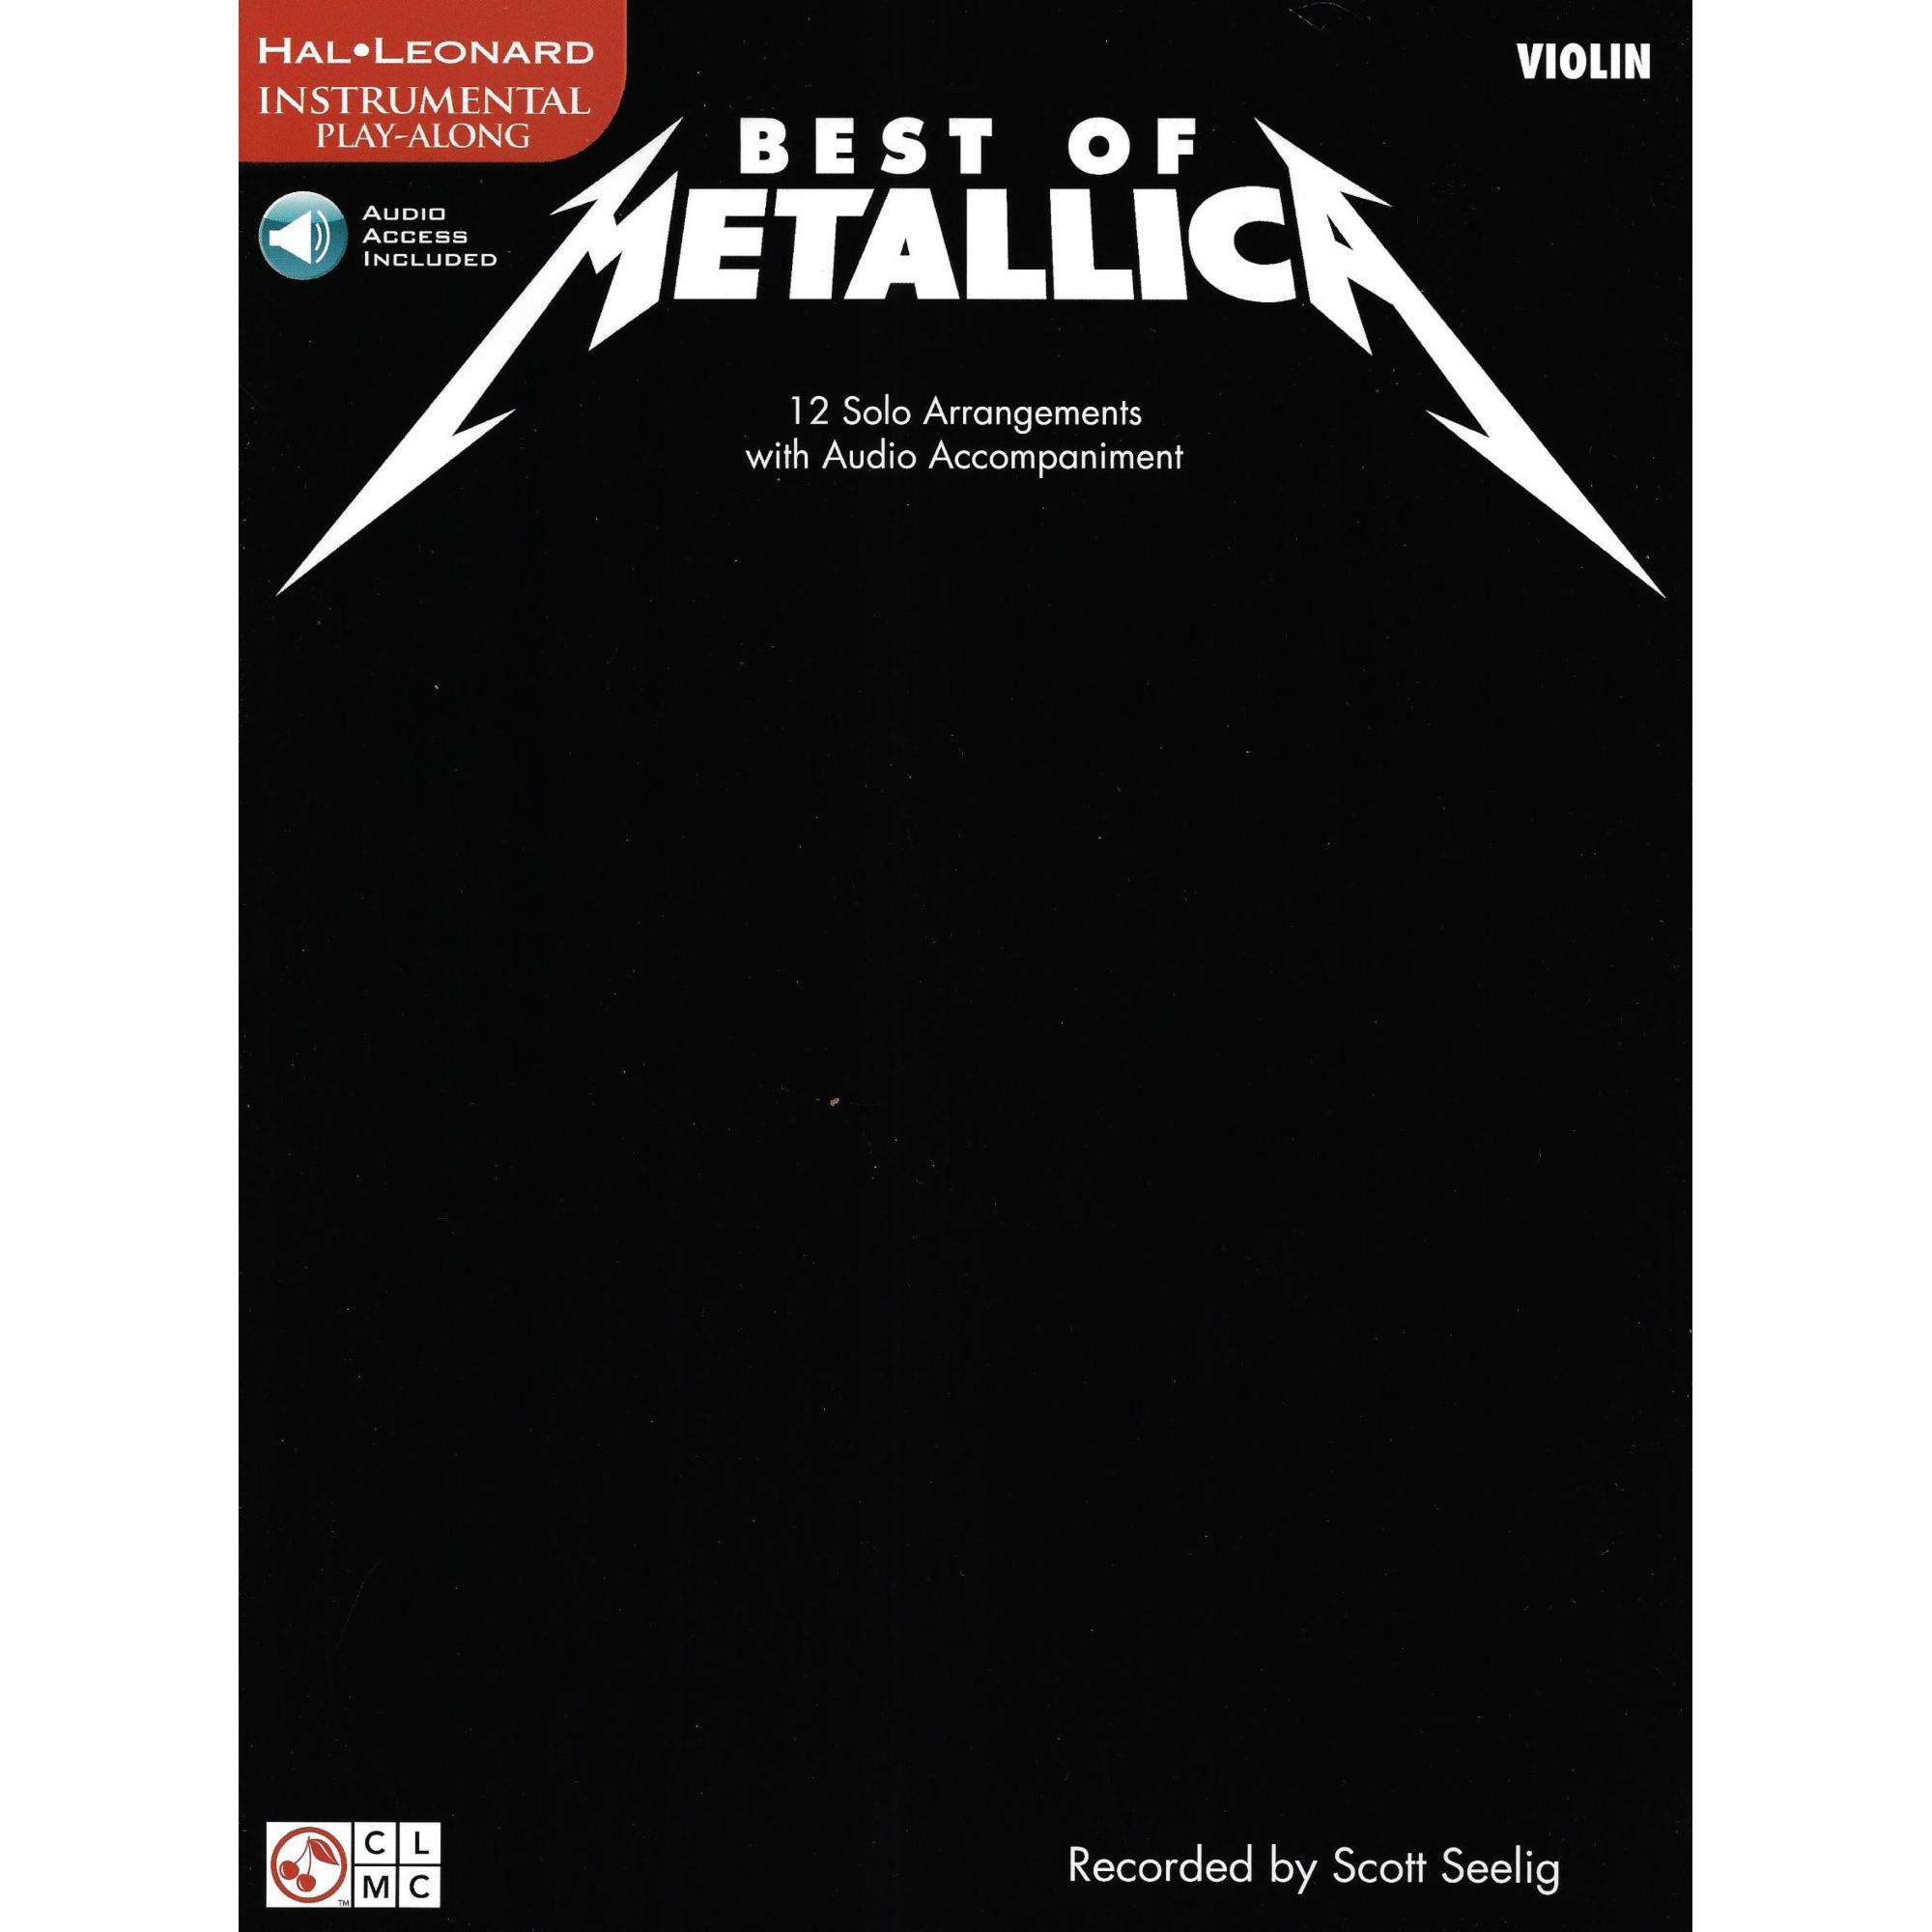 Metallica for Violin, Viola, or Cello